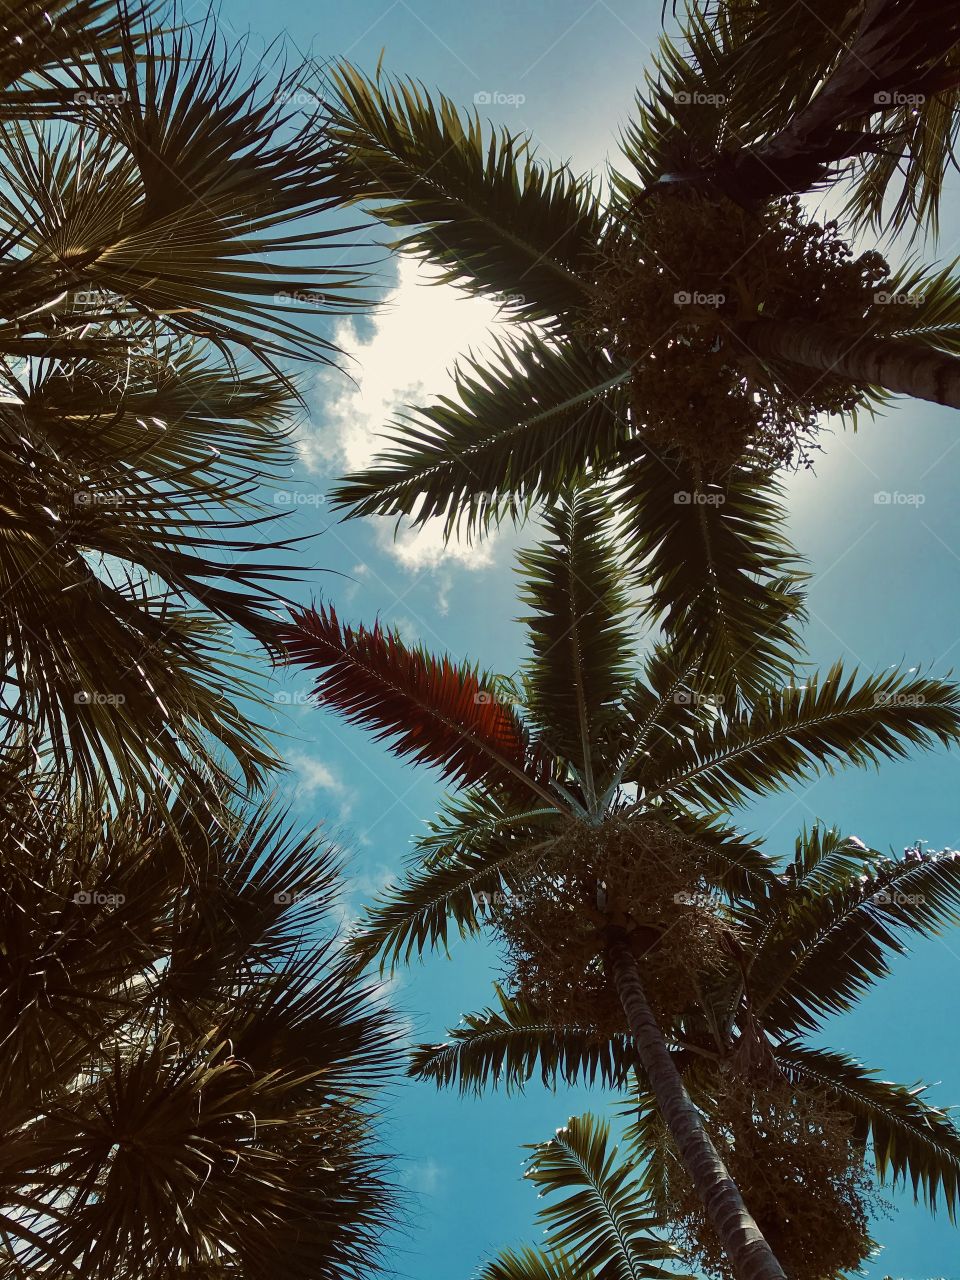 Underneath the palm tree 